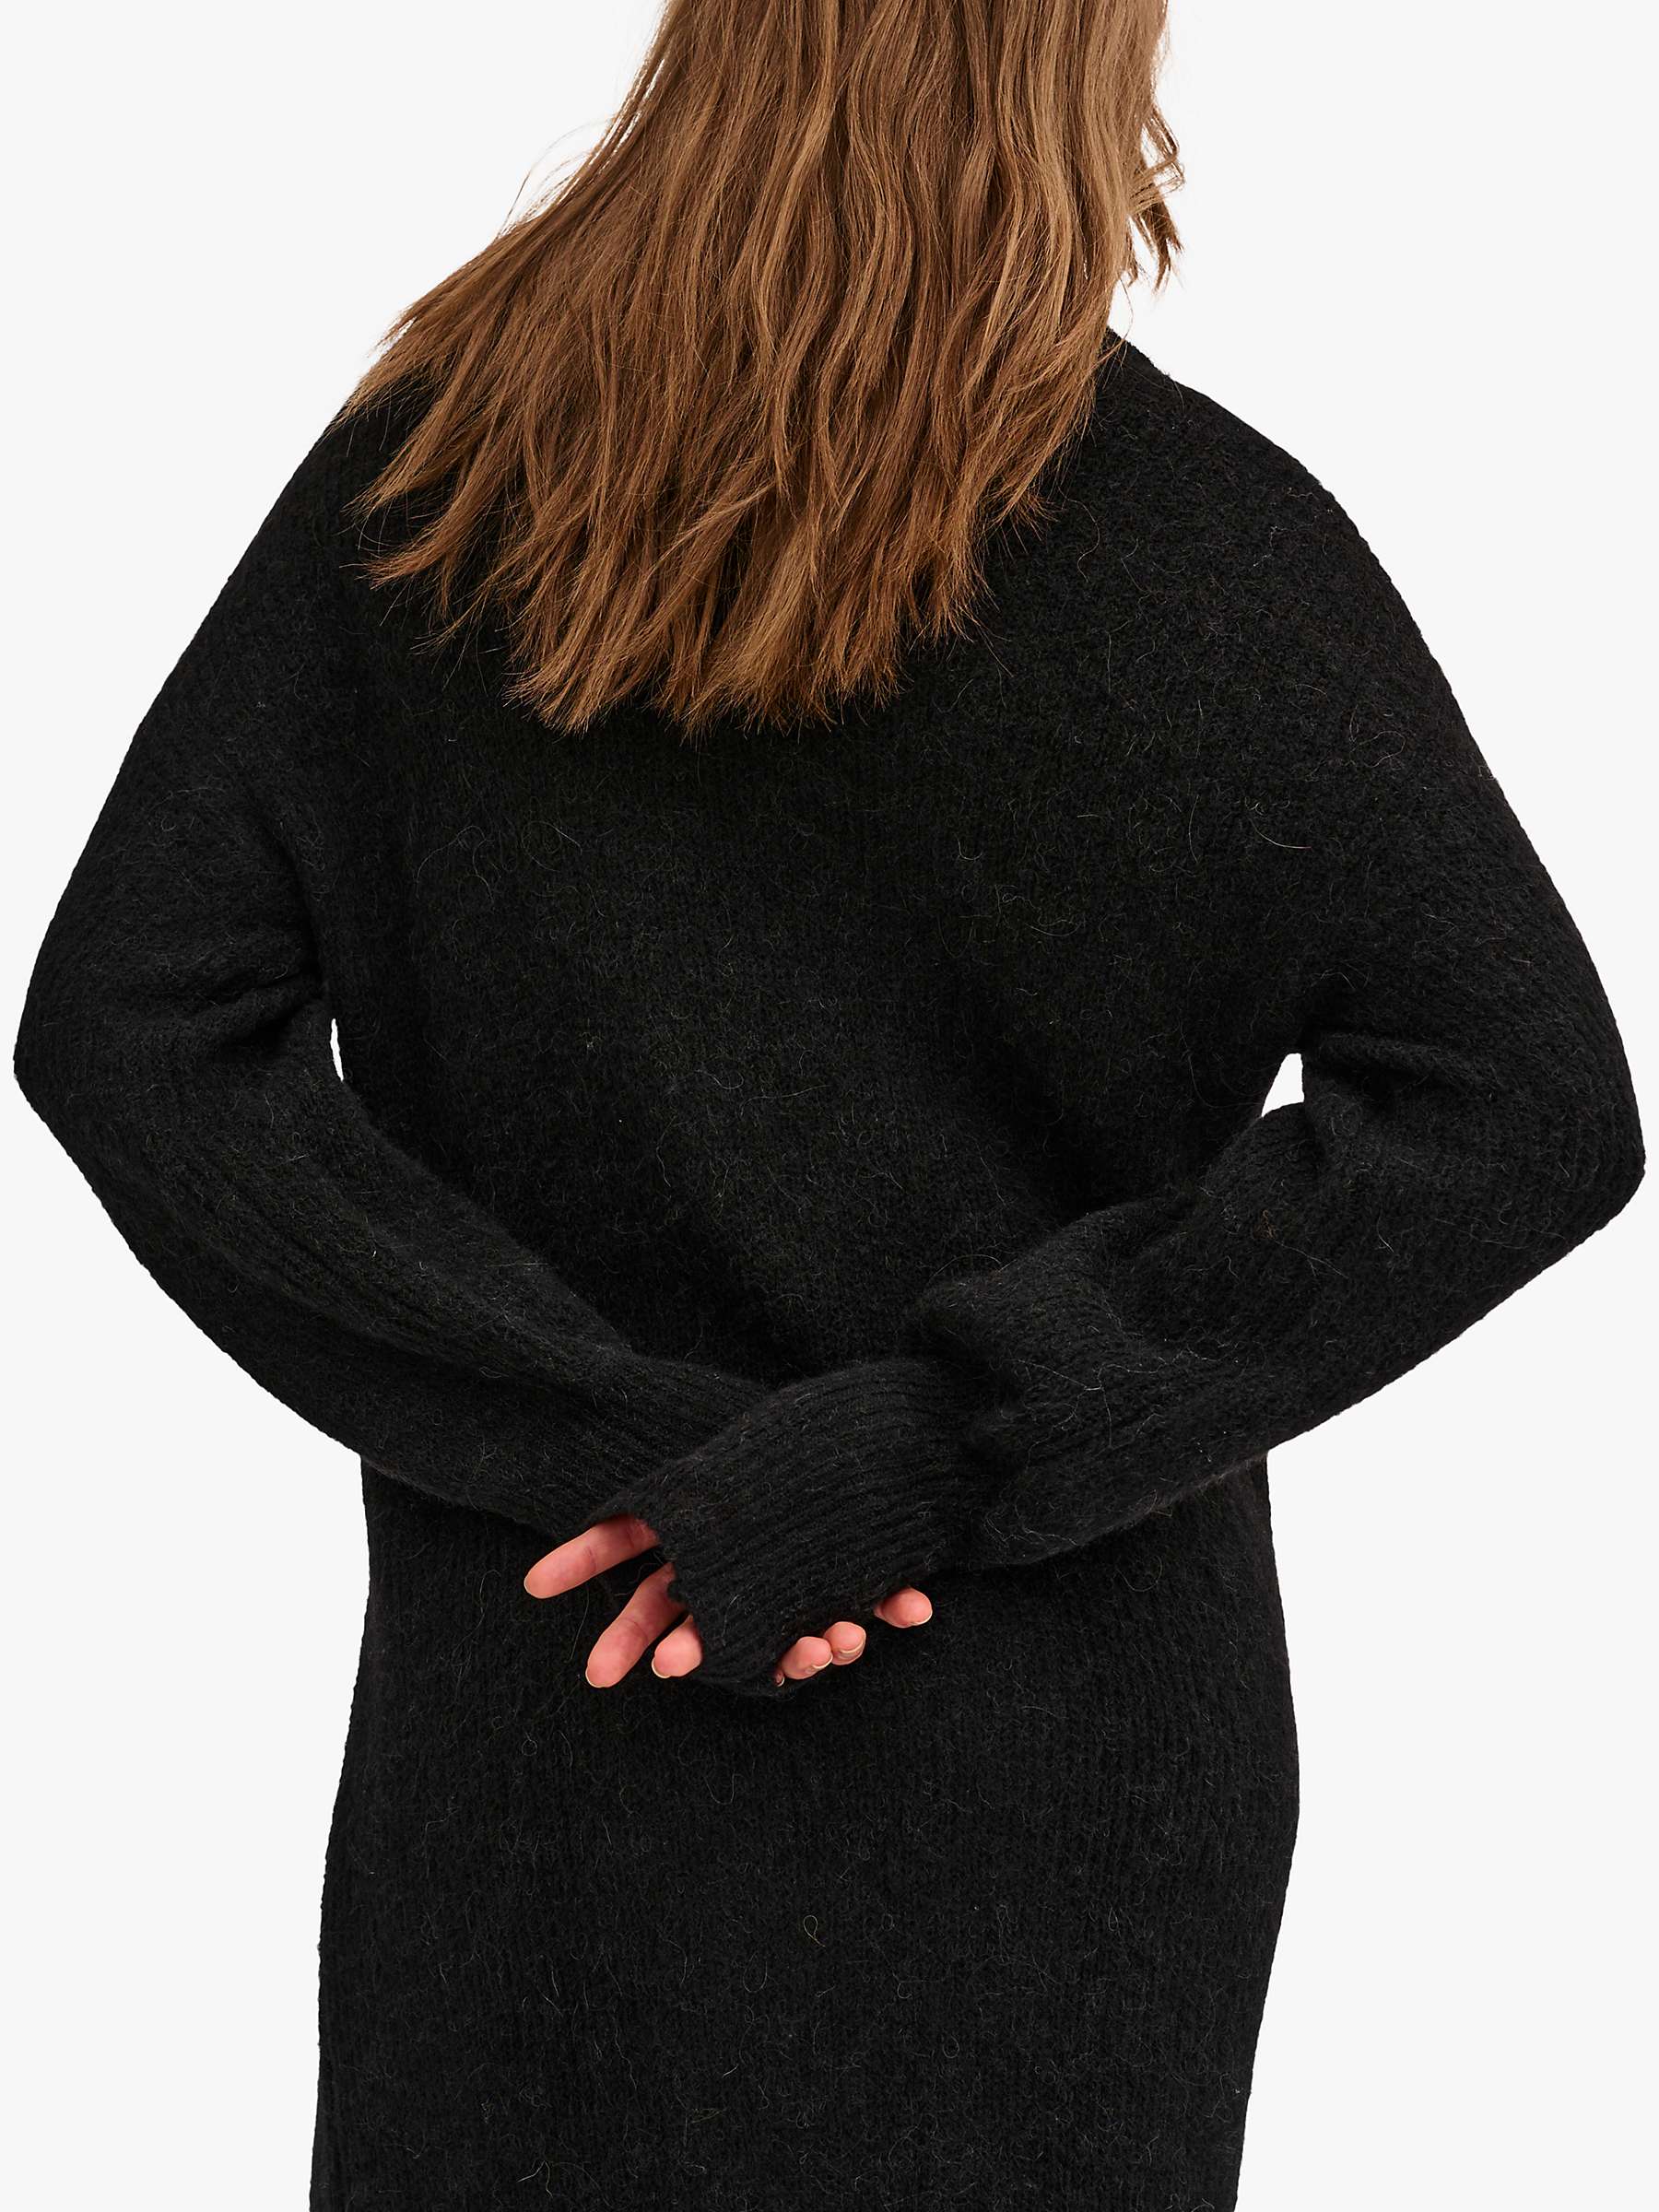 Buy MY ESSENTIAL WARDROBE Julie Knitted Midi Dress, Black Online at johnlewis.com